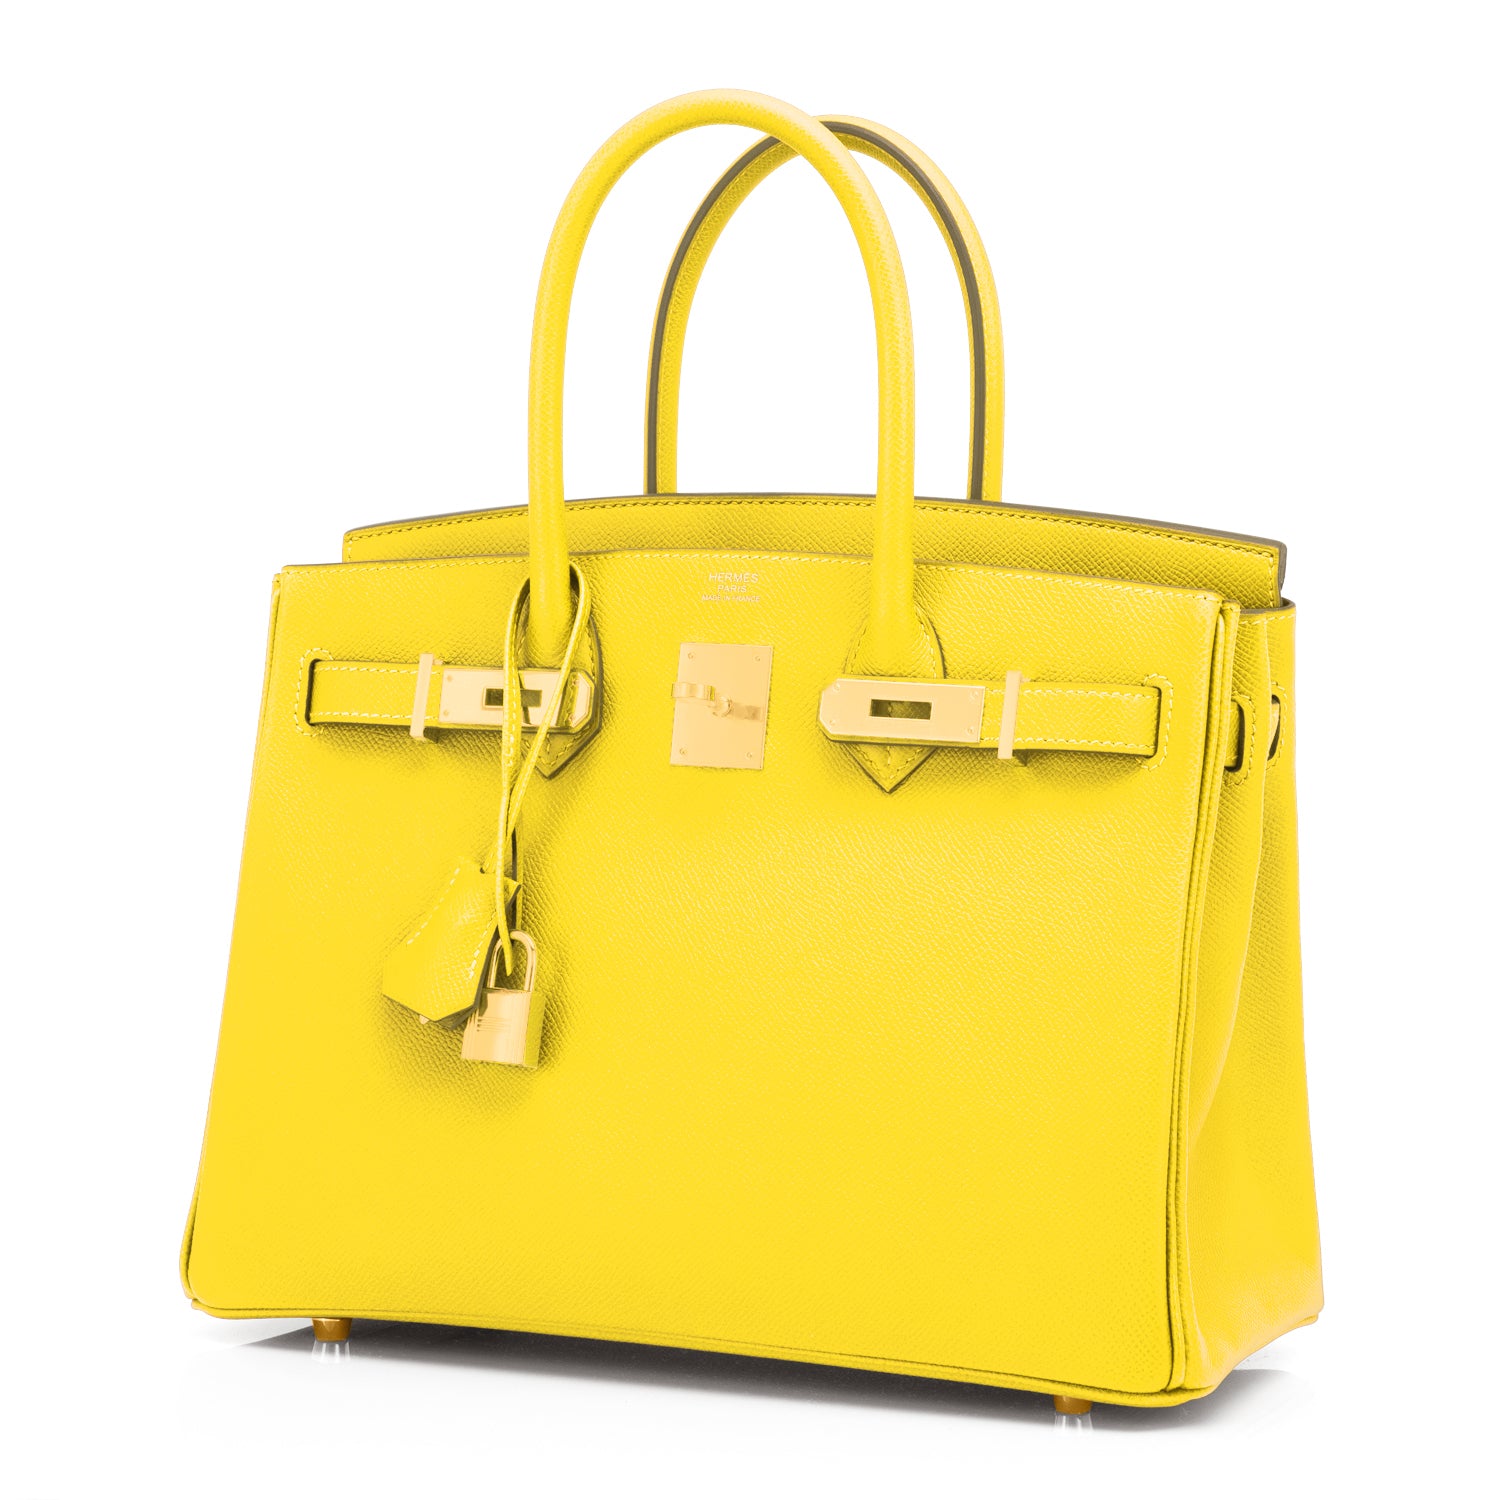 Hermes Birkin Handbag Yellow Epsom with Palladium Hardware 30